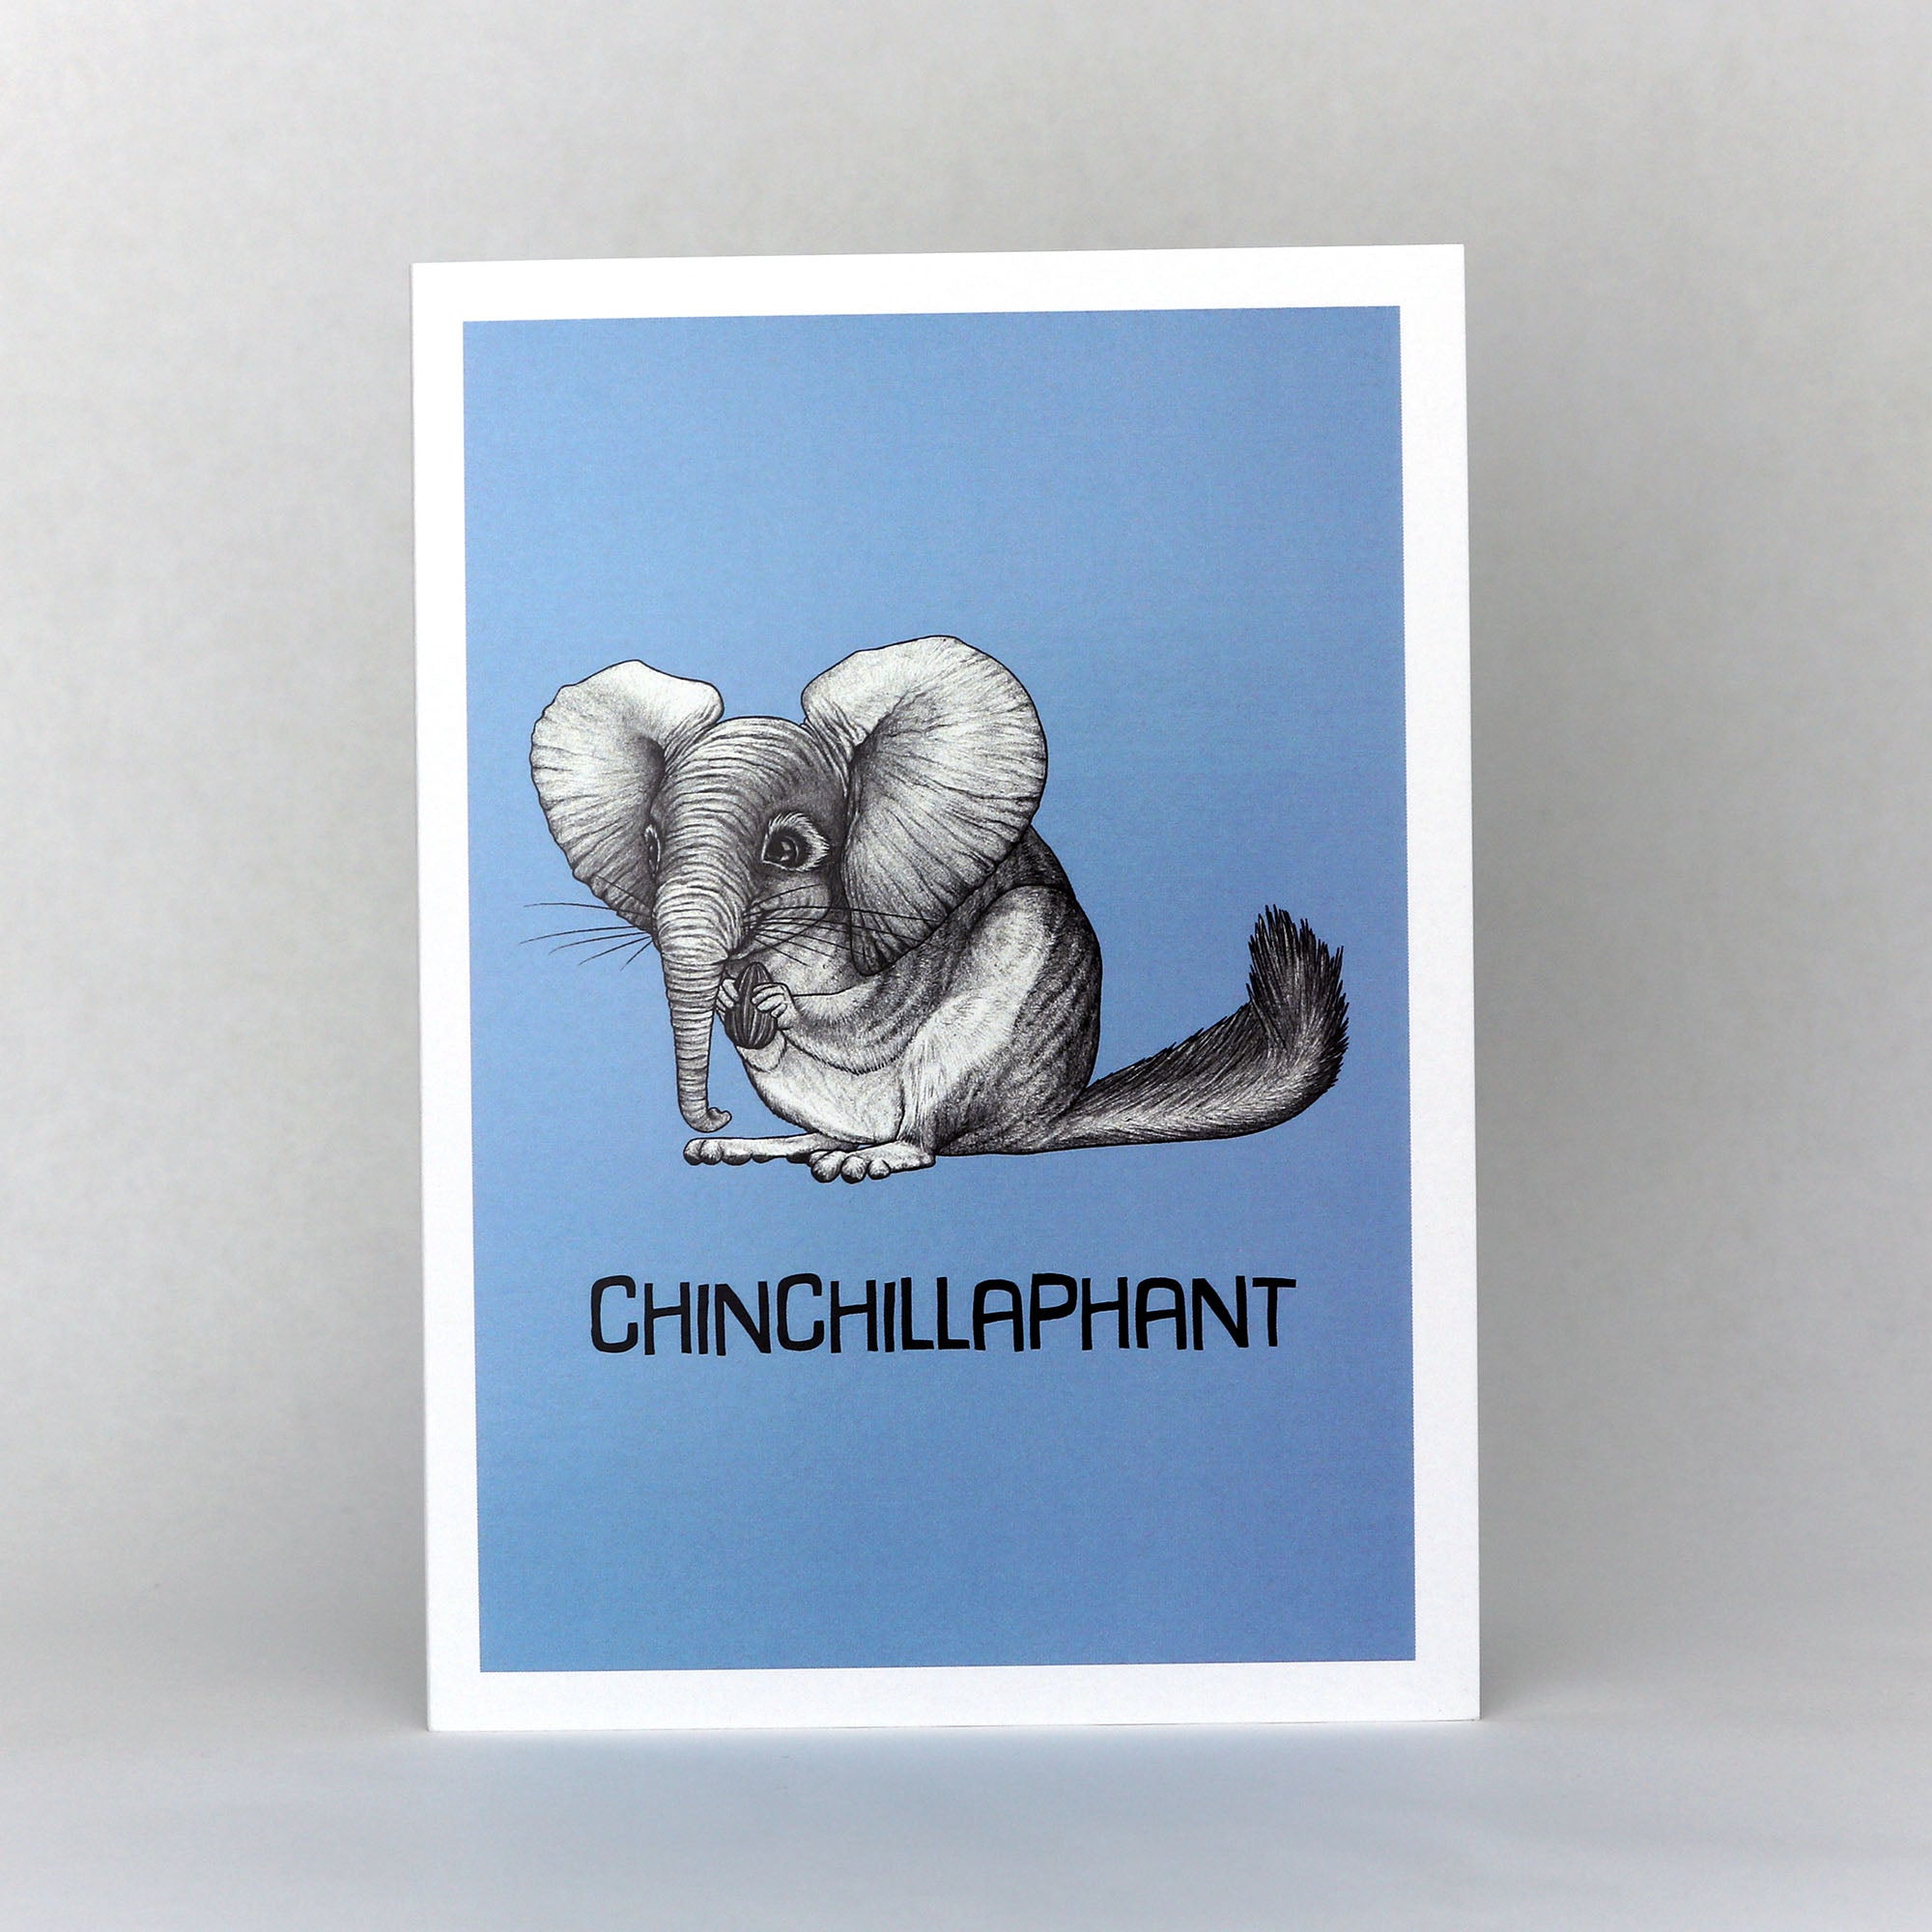 Chinchillaphant | Chinchilla + Elephant Hybrid Animal | 5x7" Greeting Card